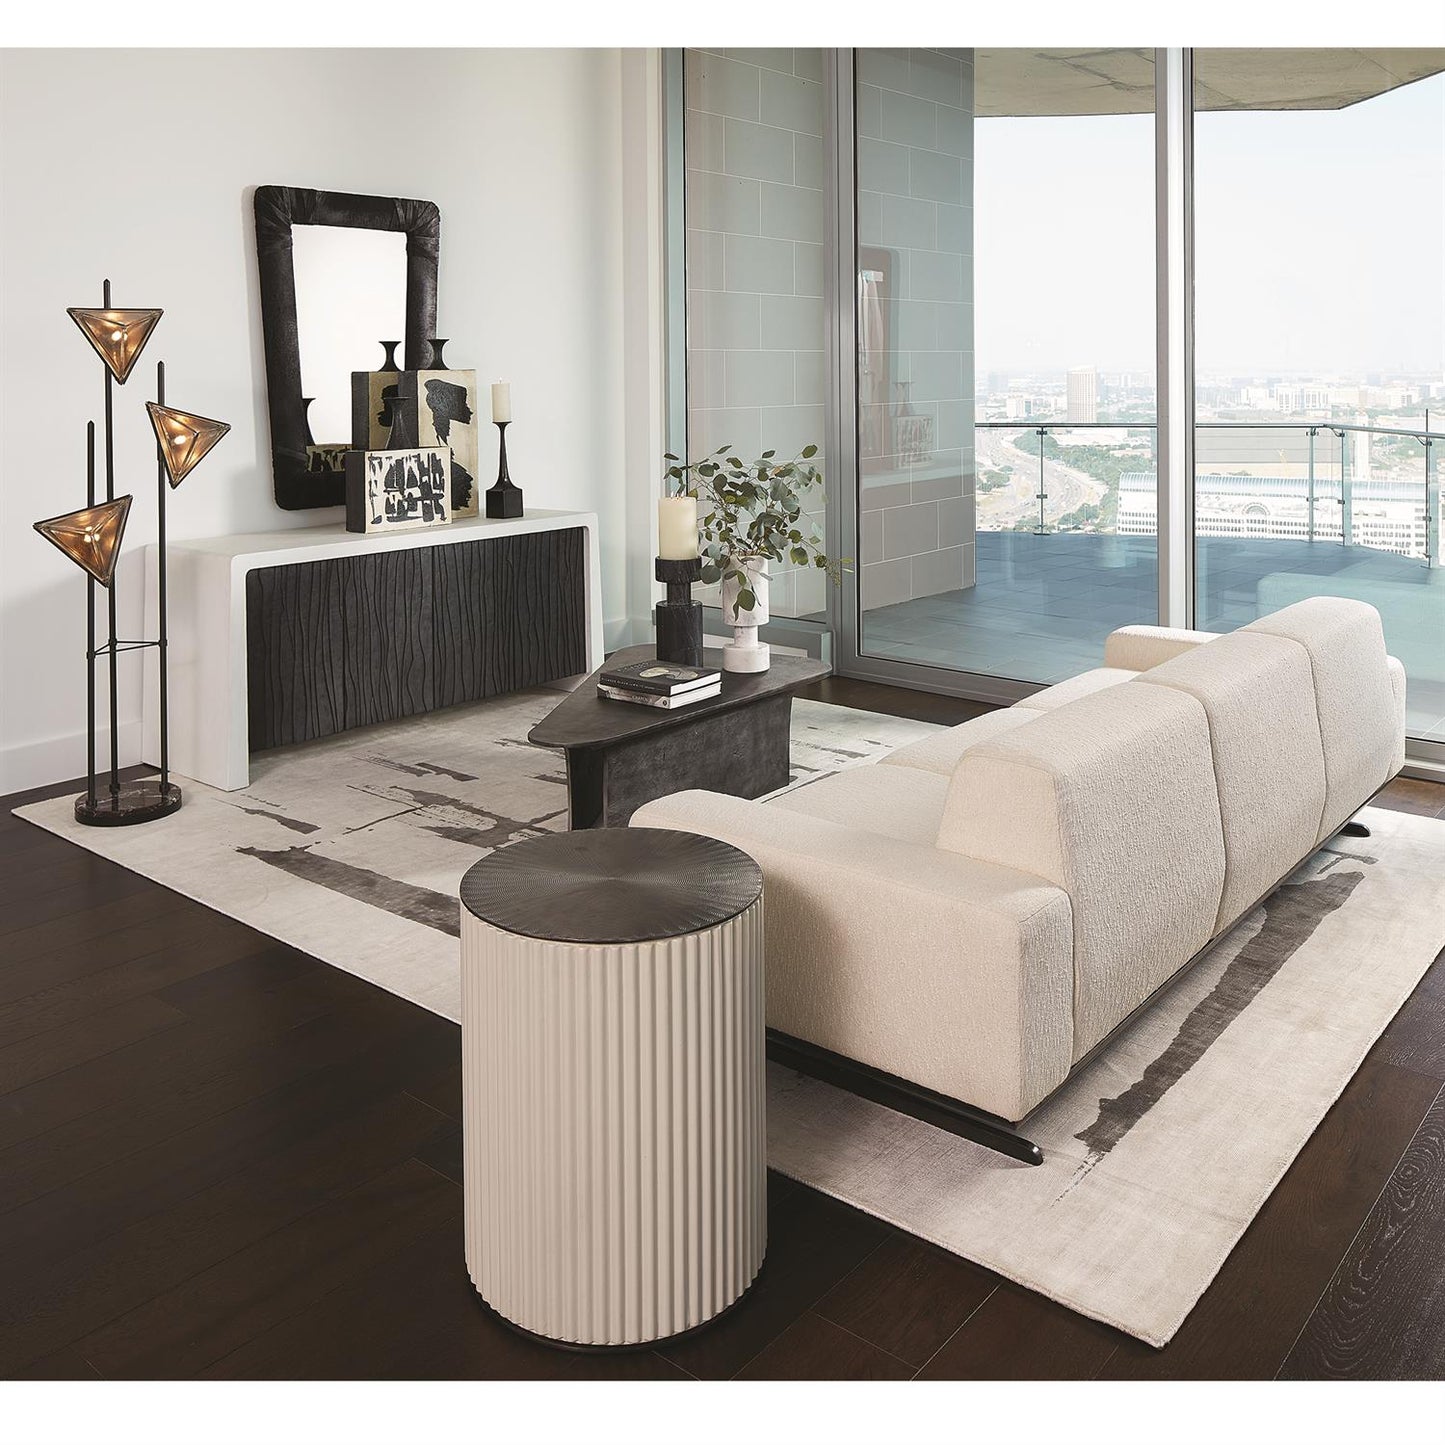 Camille Side Table - Bronze - Grats Decor Interior Design & Build Inc.